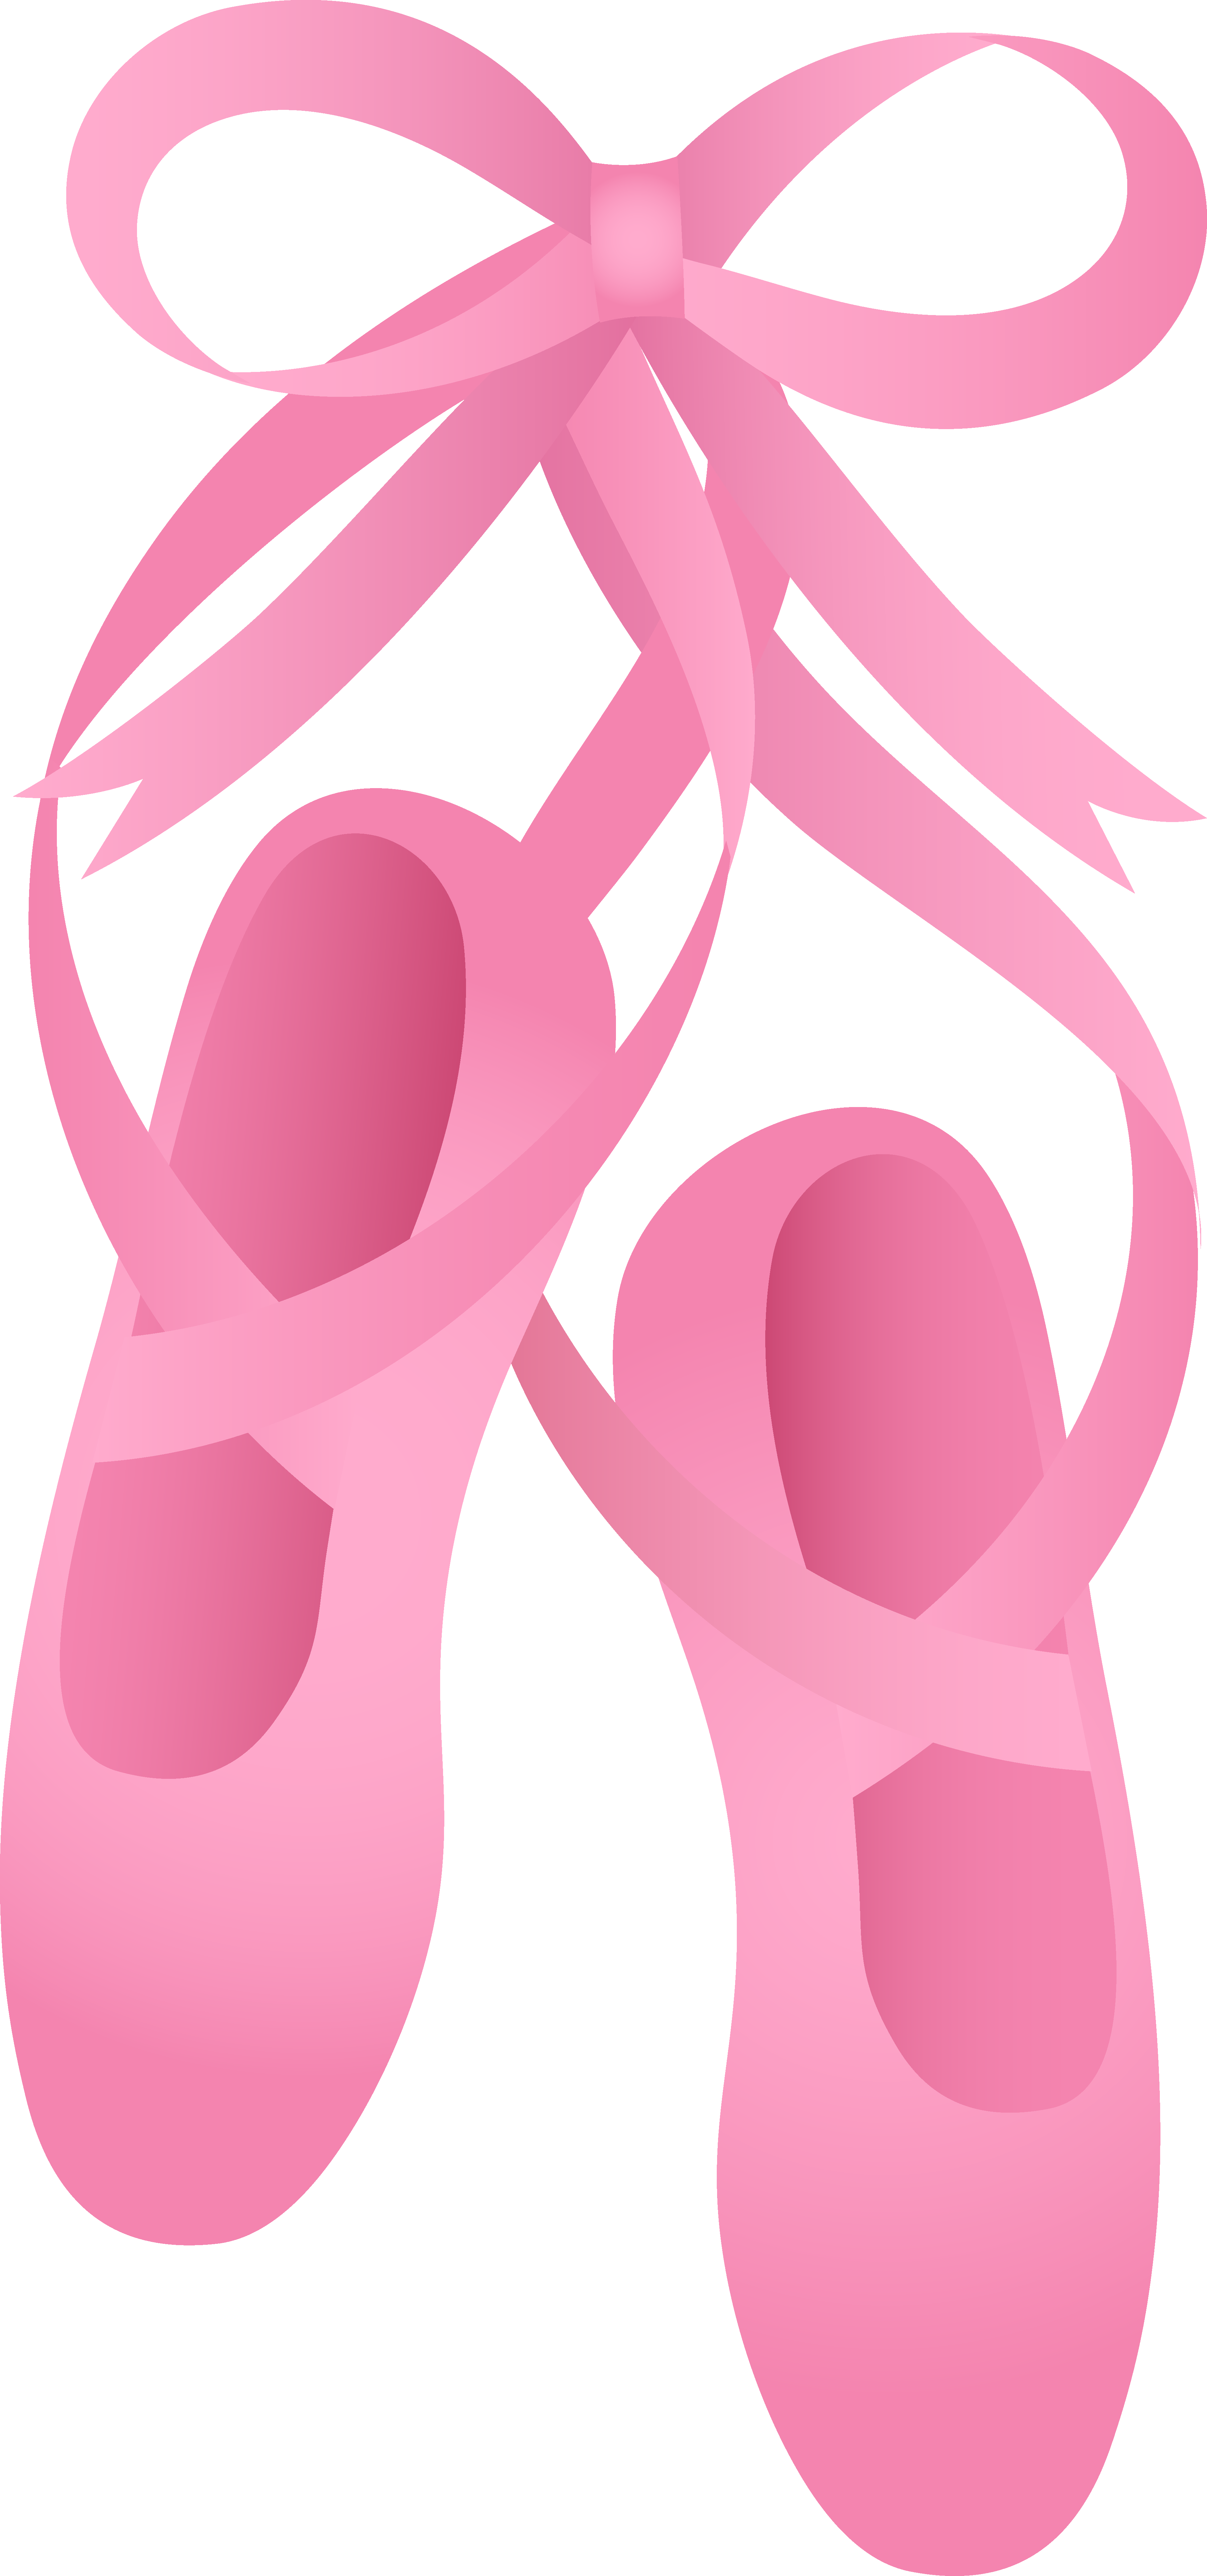 Cartoon Ballet Shoes Clipart Best. Pair of Pink Ballet Slippers